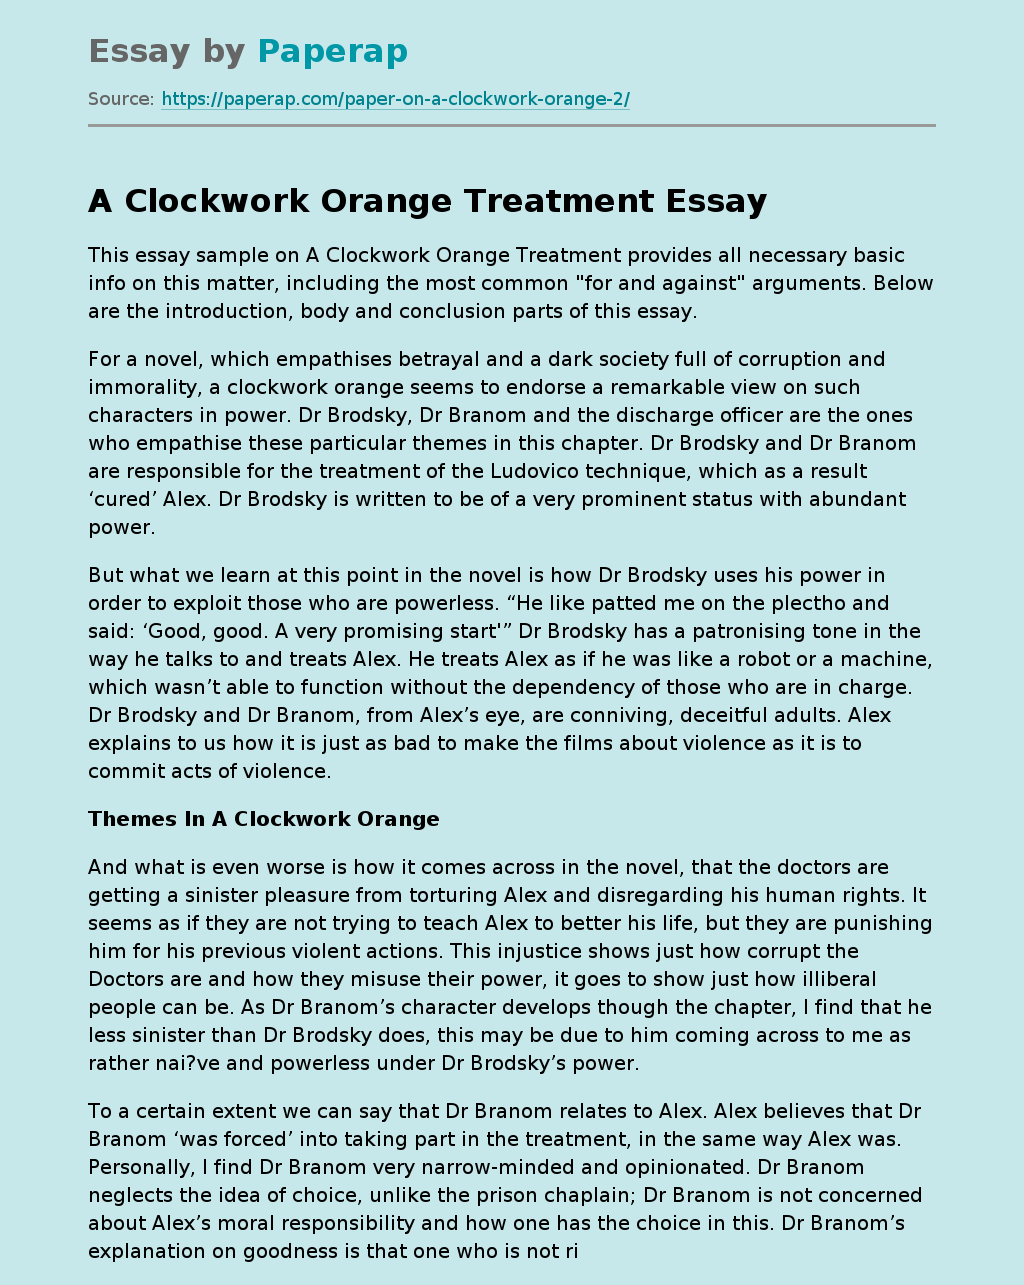 A Clockwork Orange Treatment